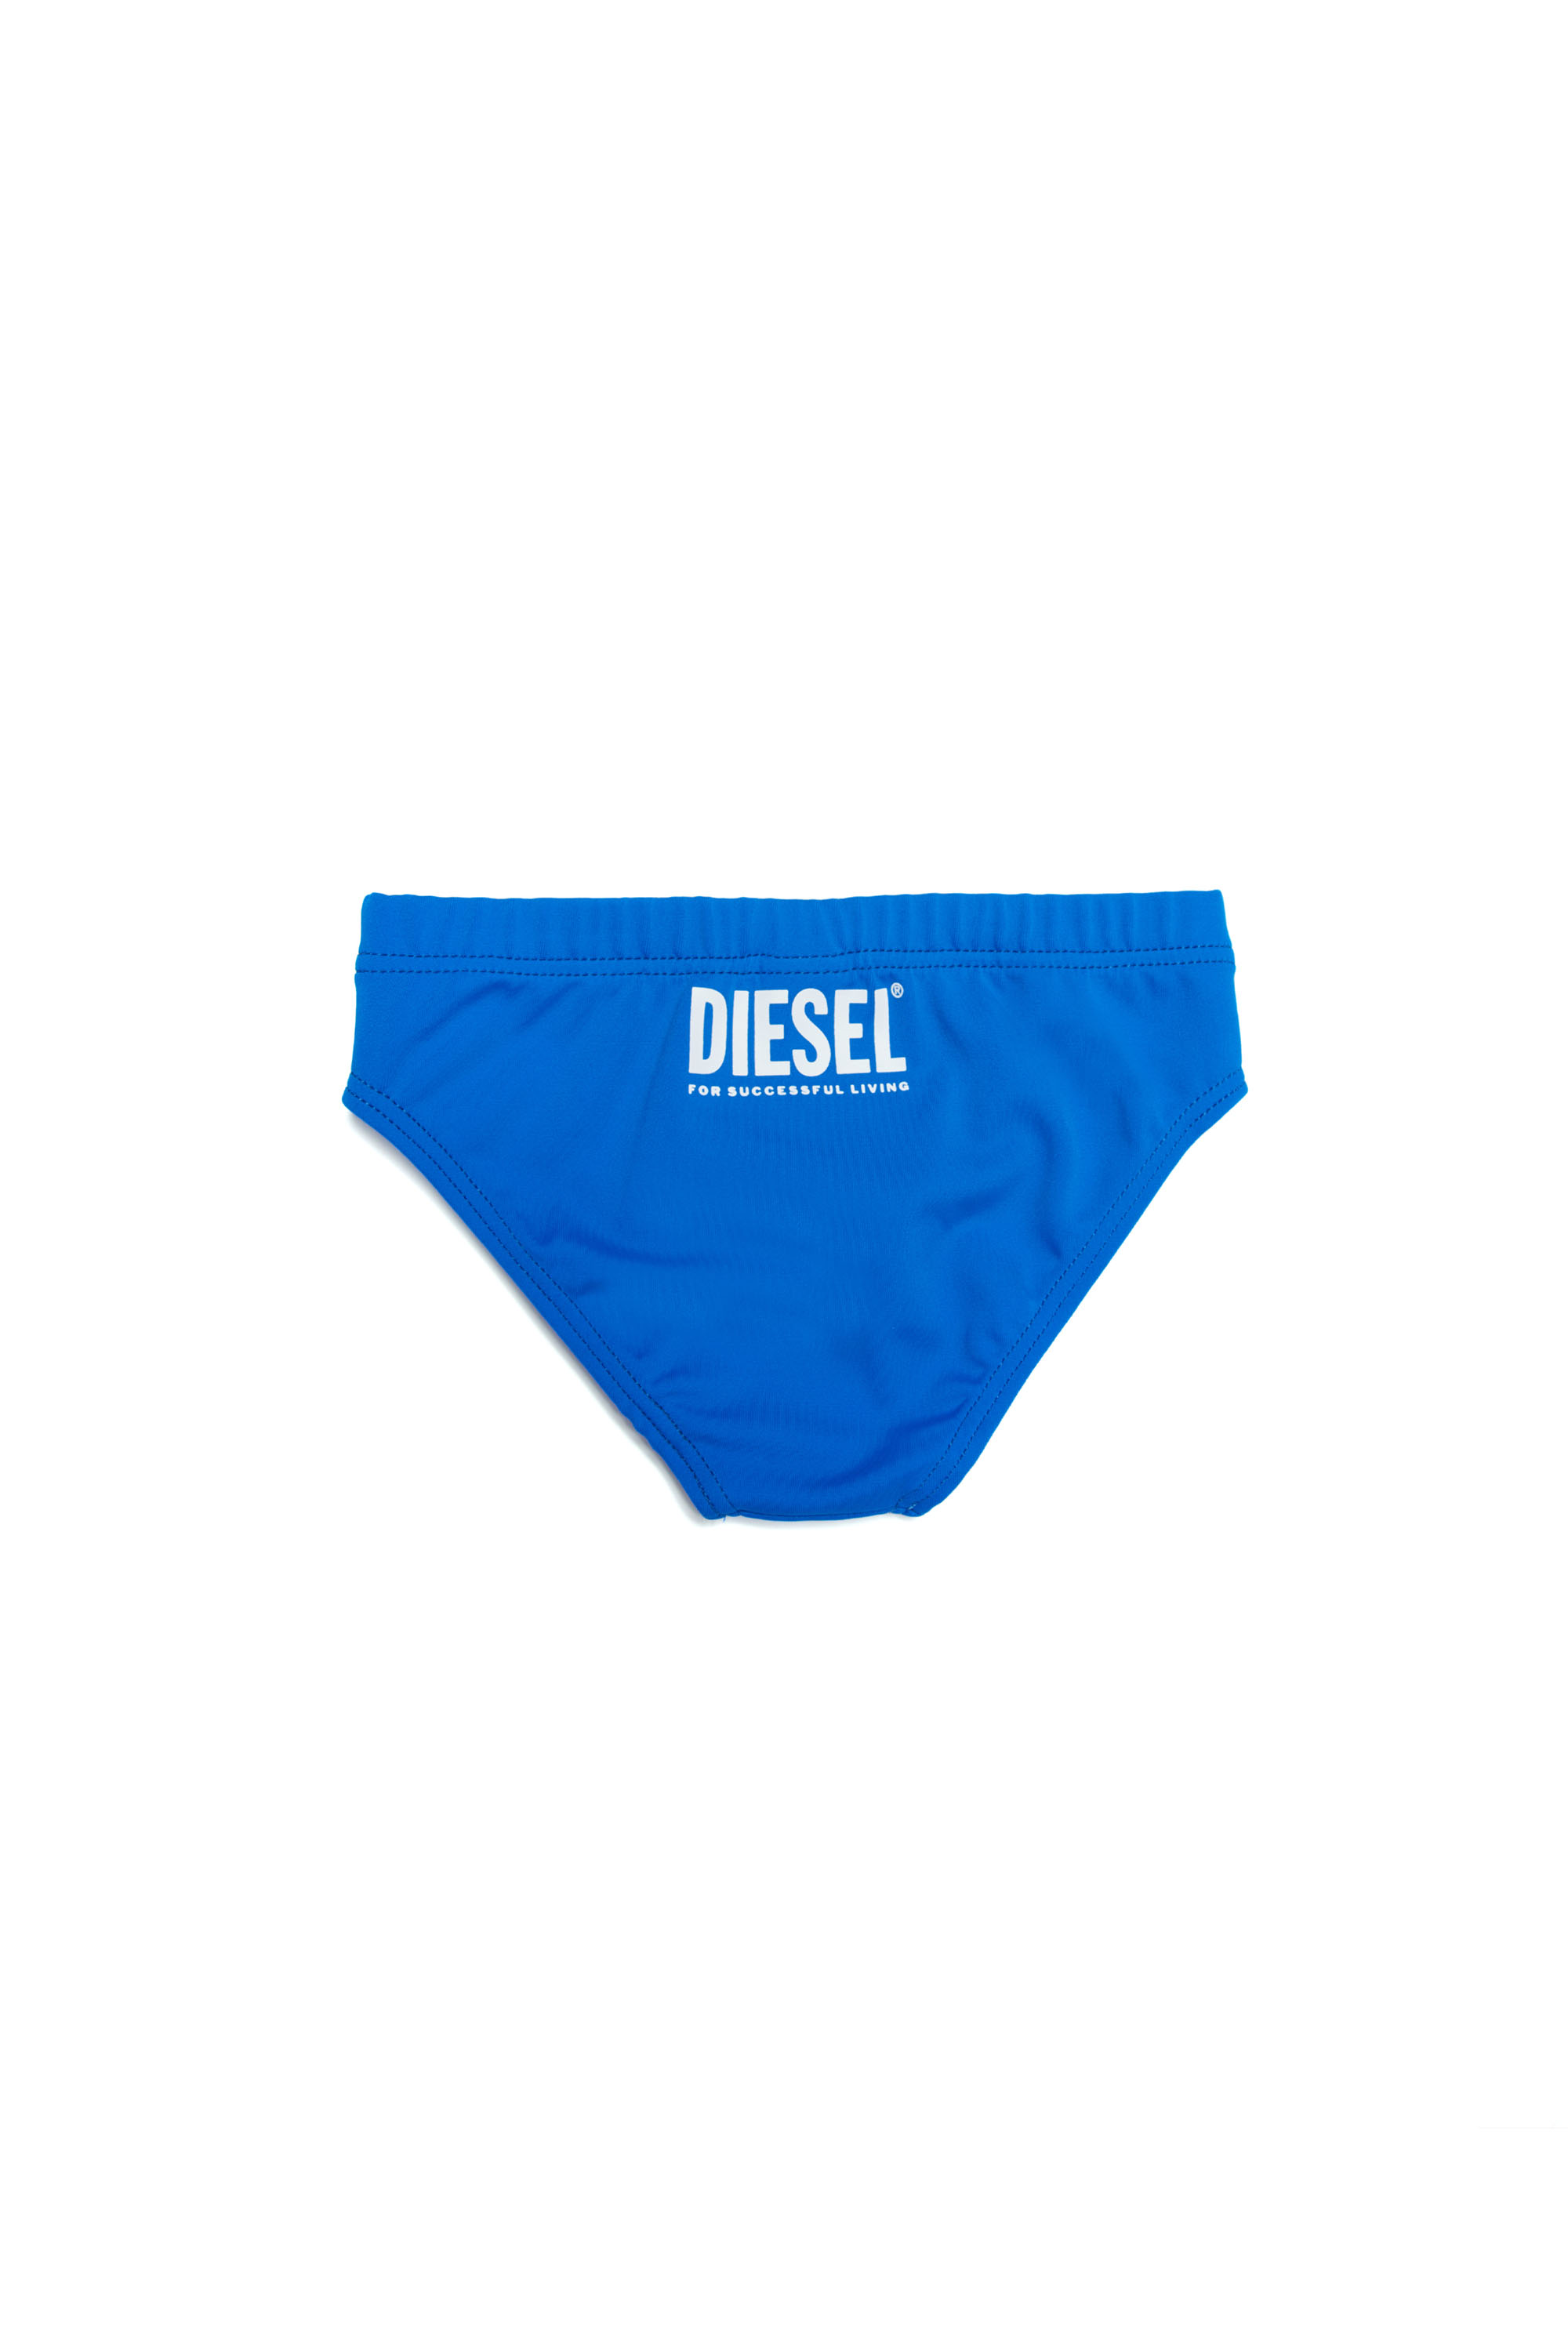 Diesel - MUNNYB, Blue - Image 2